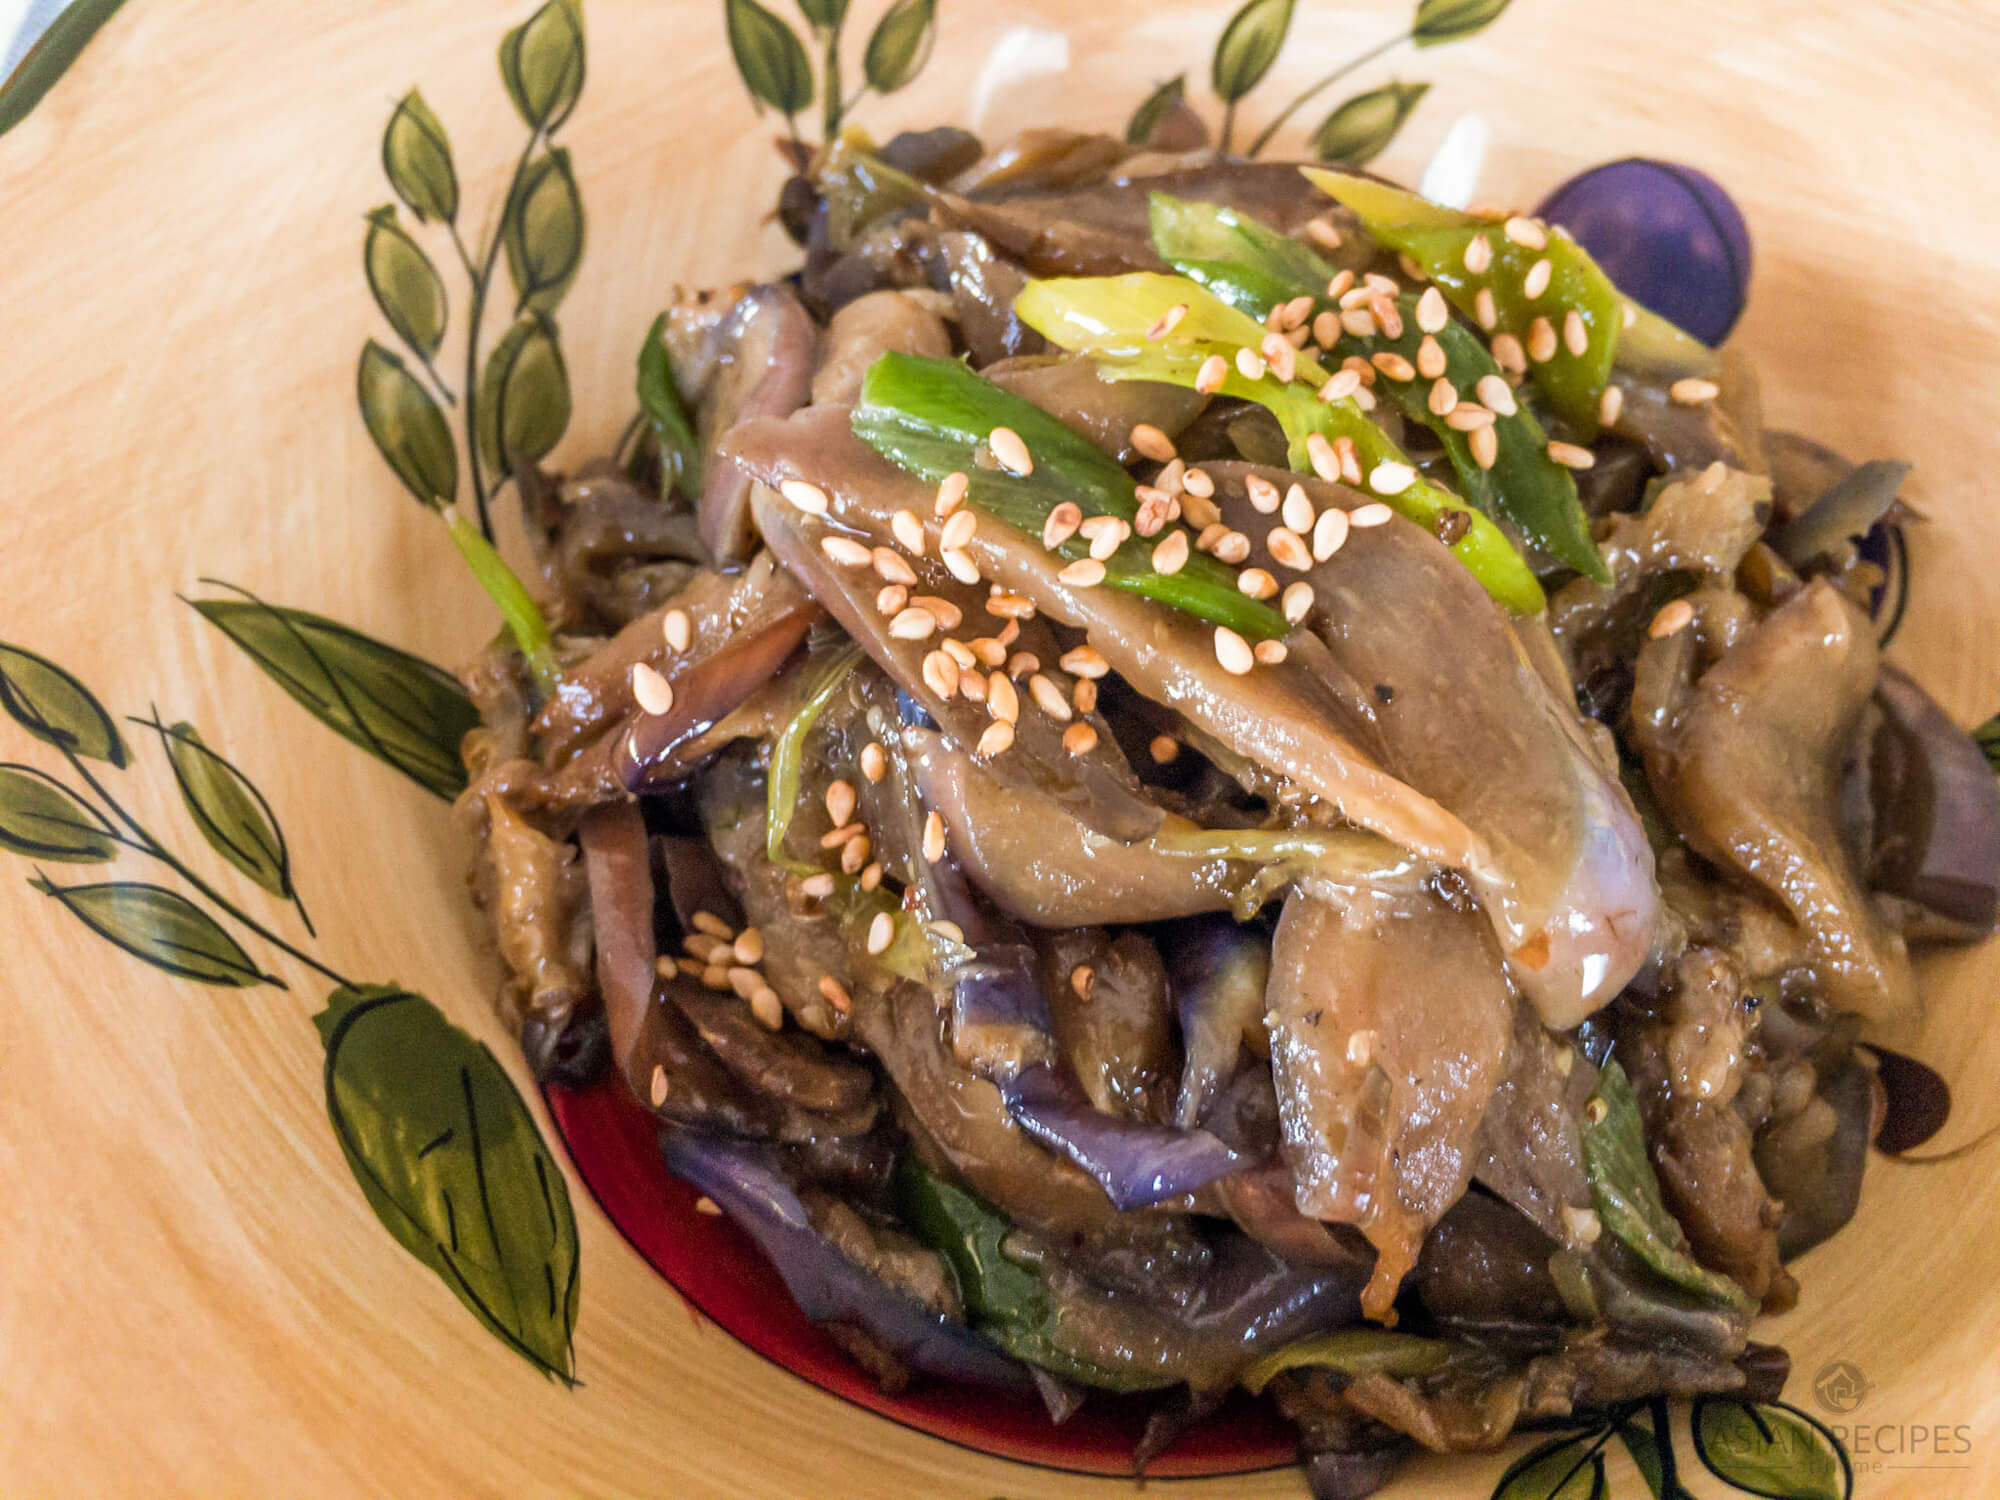 This Korean-style Stir-Fried Eggplant (Gaji Bokkeum) side dish is easy to make with simple seasonings.